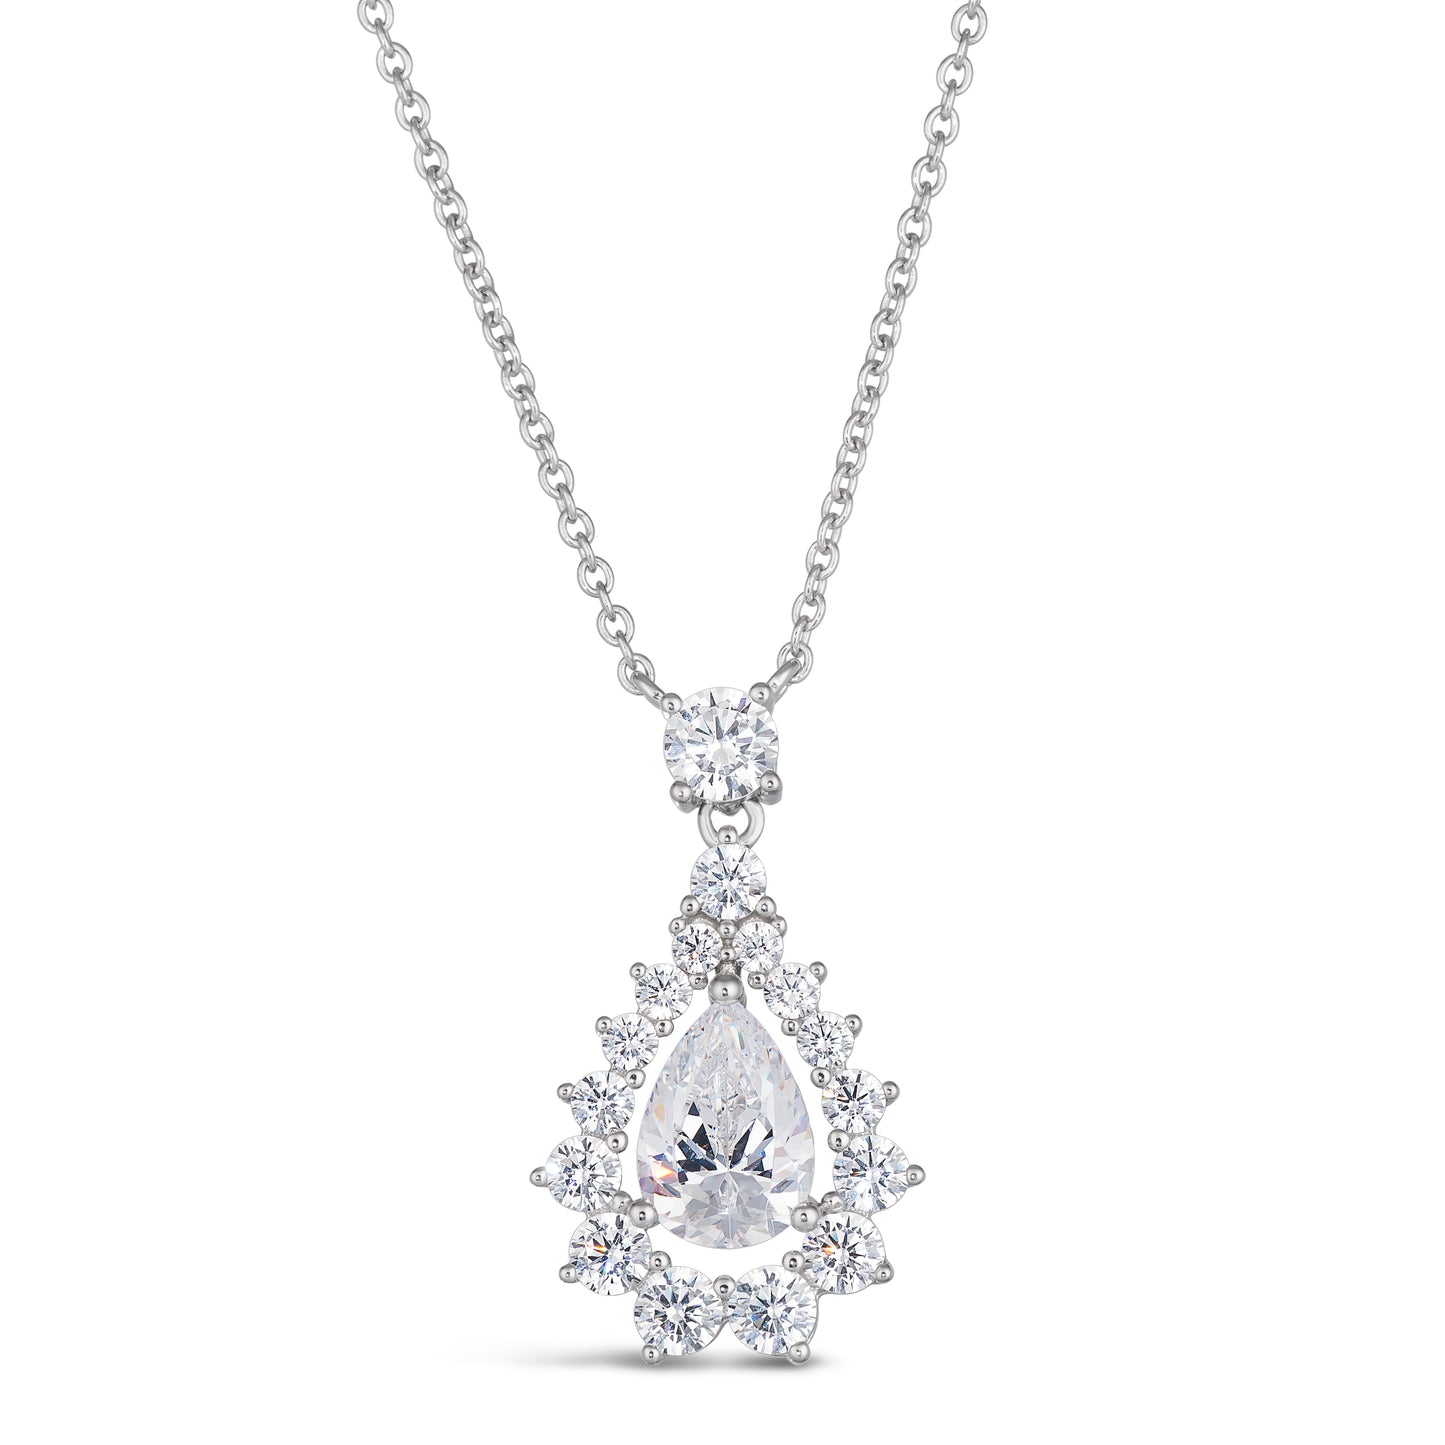 Elizabeth 48 Necklace - Anna Zuckerman Luxury Necklaces